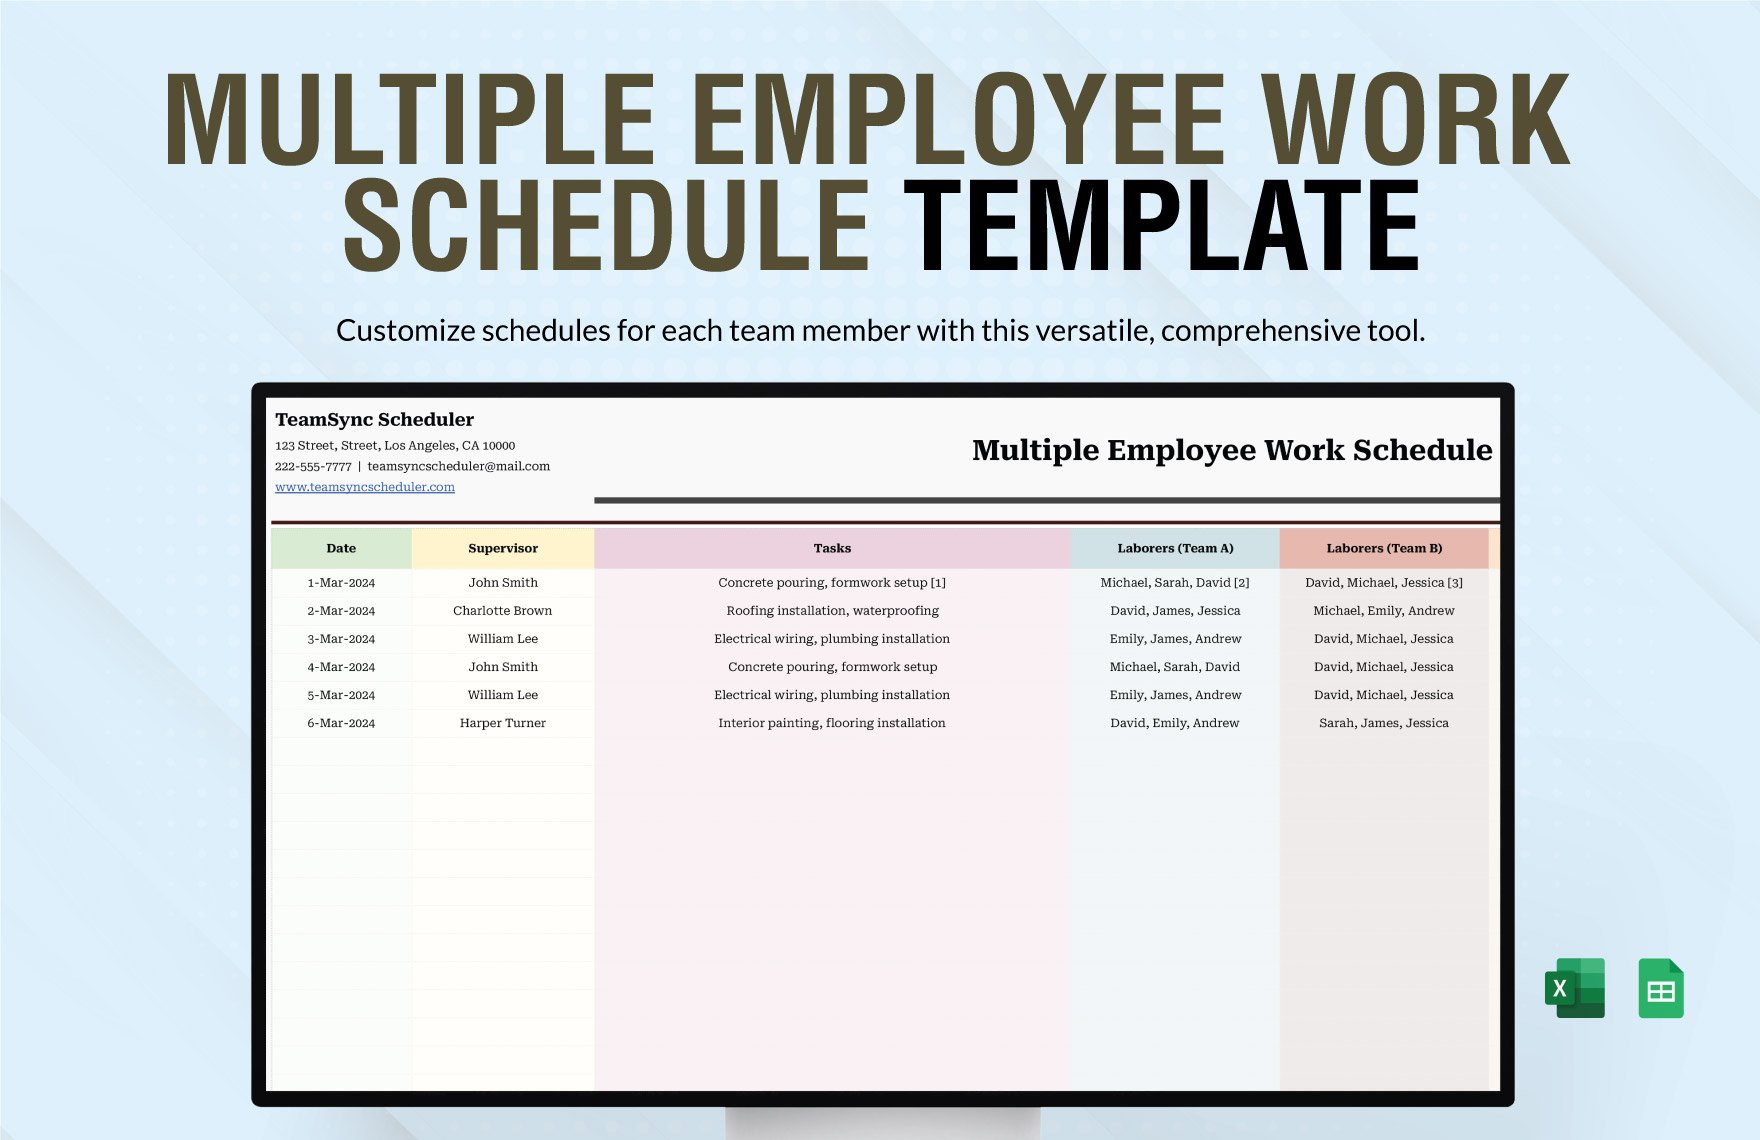 Multiple Employee Work Schedule Template in Excel, Google Sheets